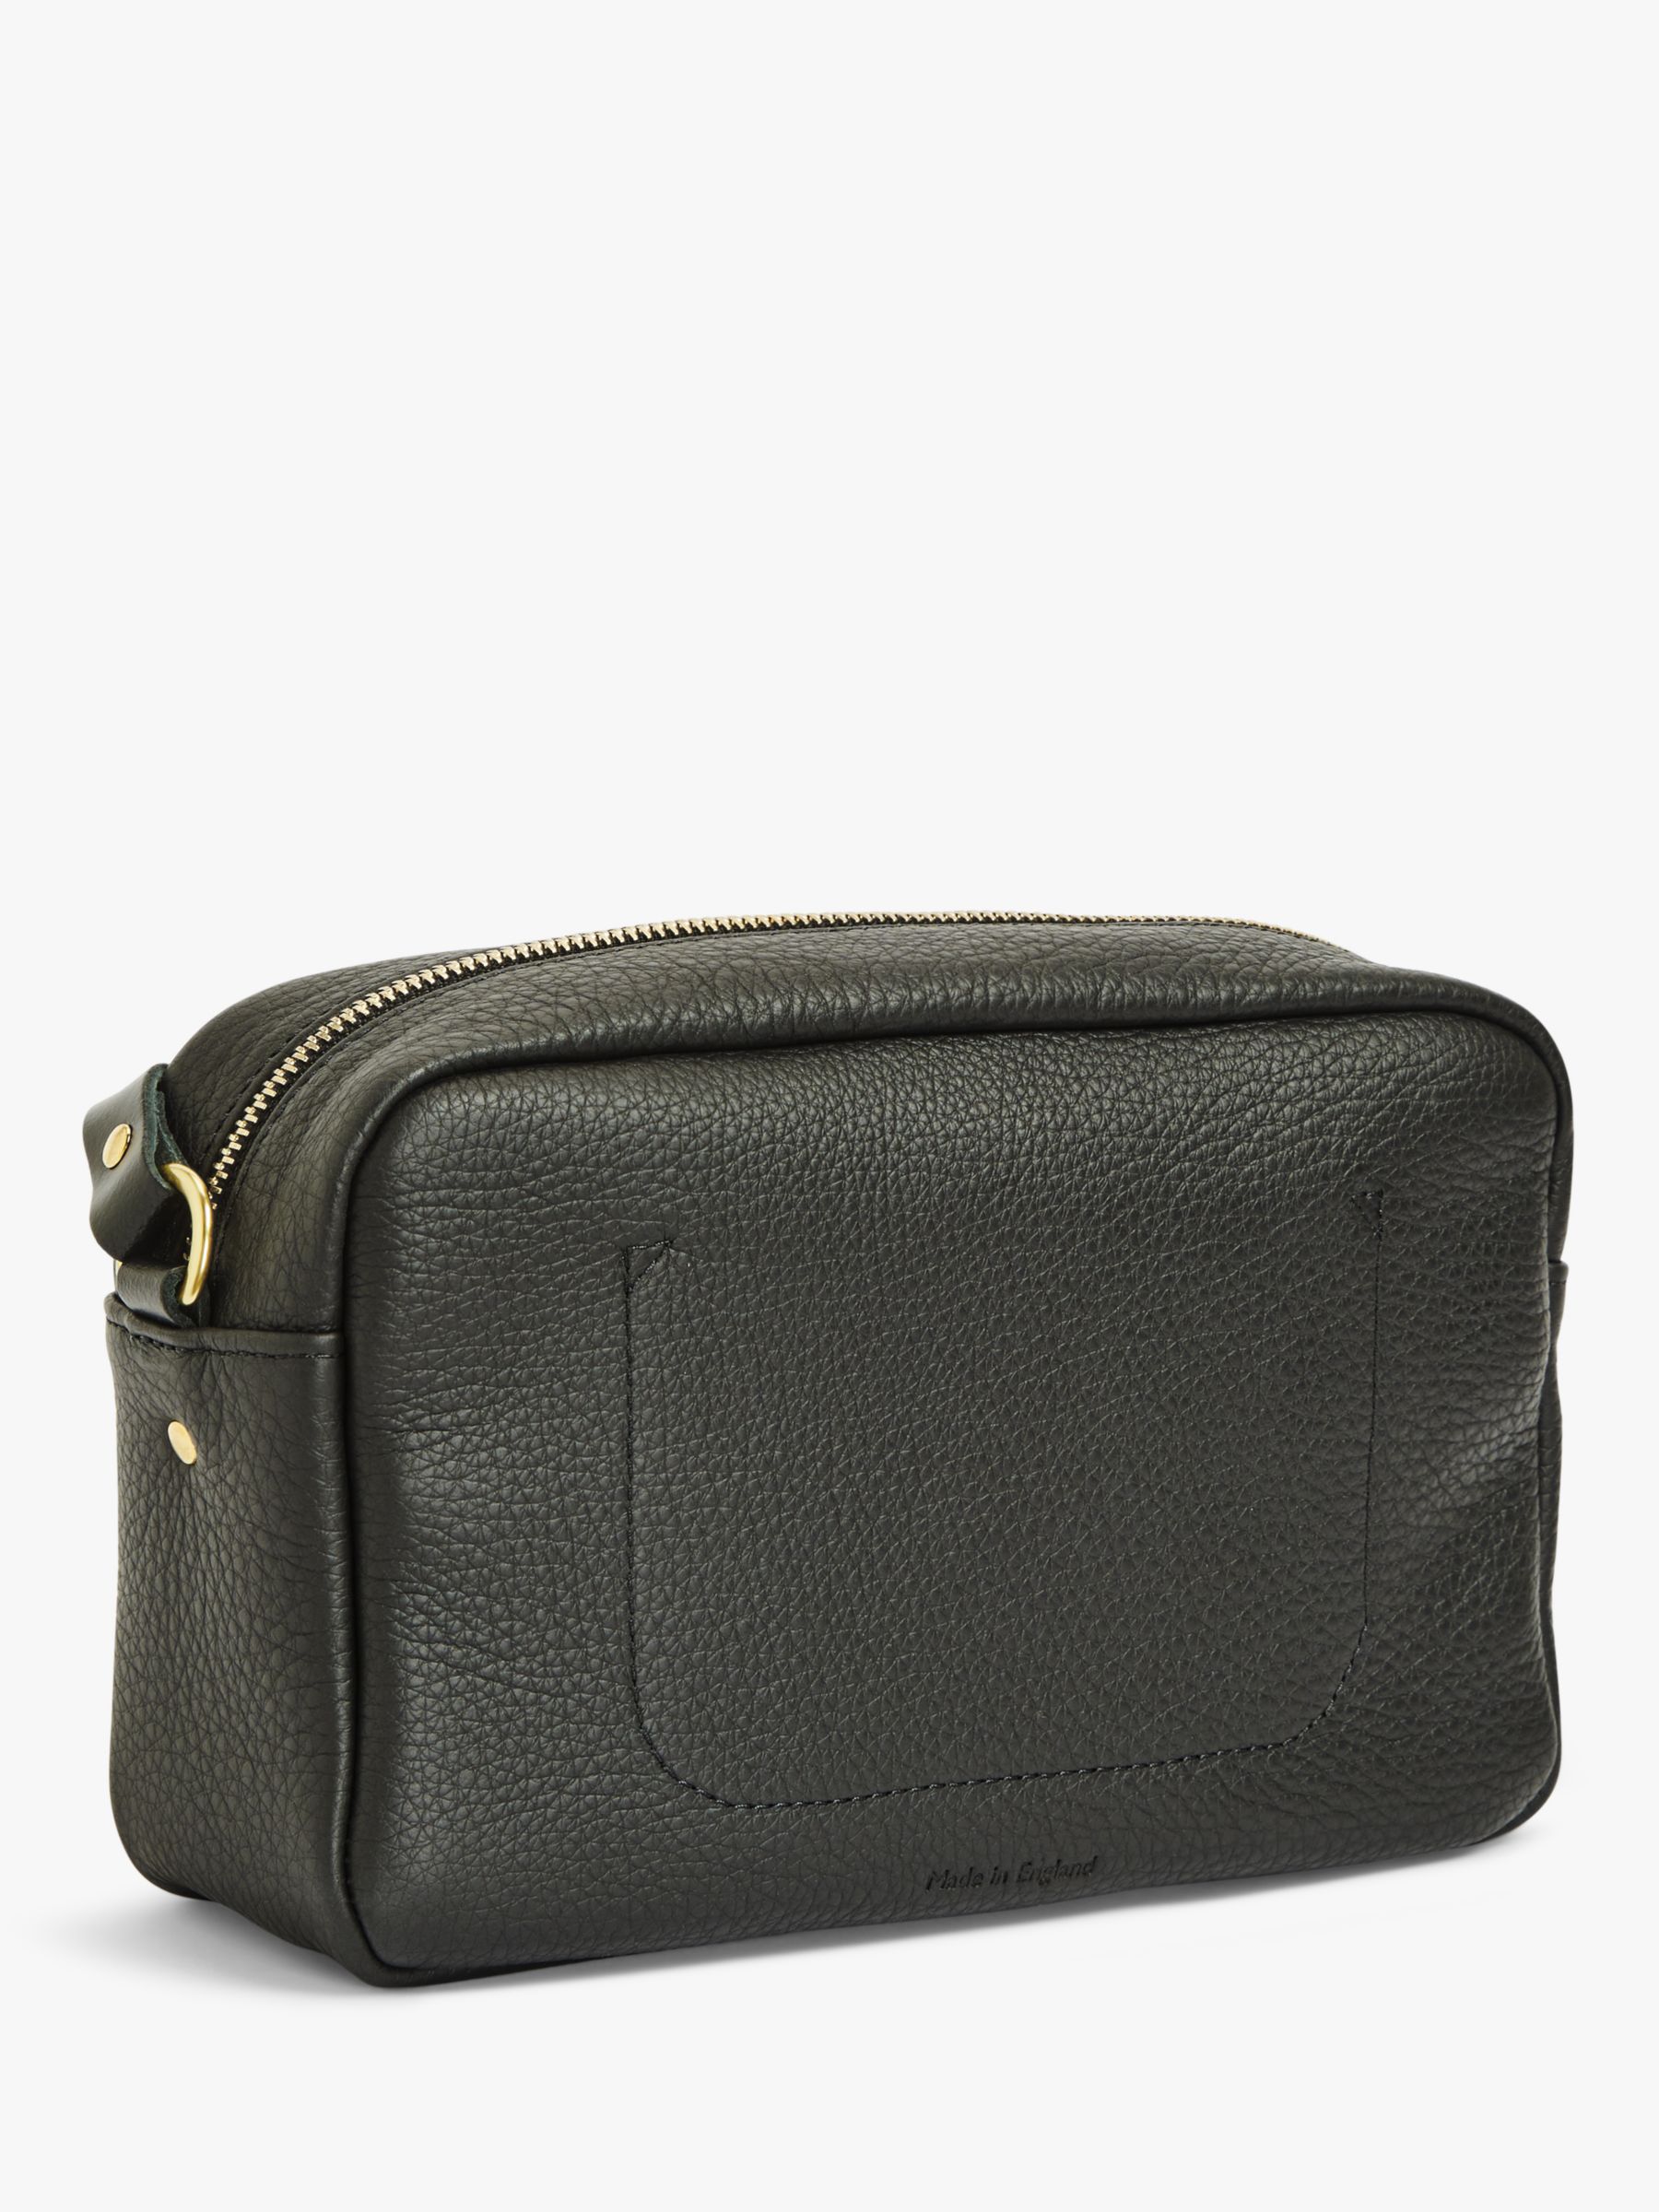 Honey & Toast Katy Leather Camera Bag, Black at John Lewis & Partners